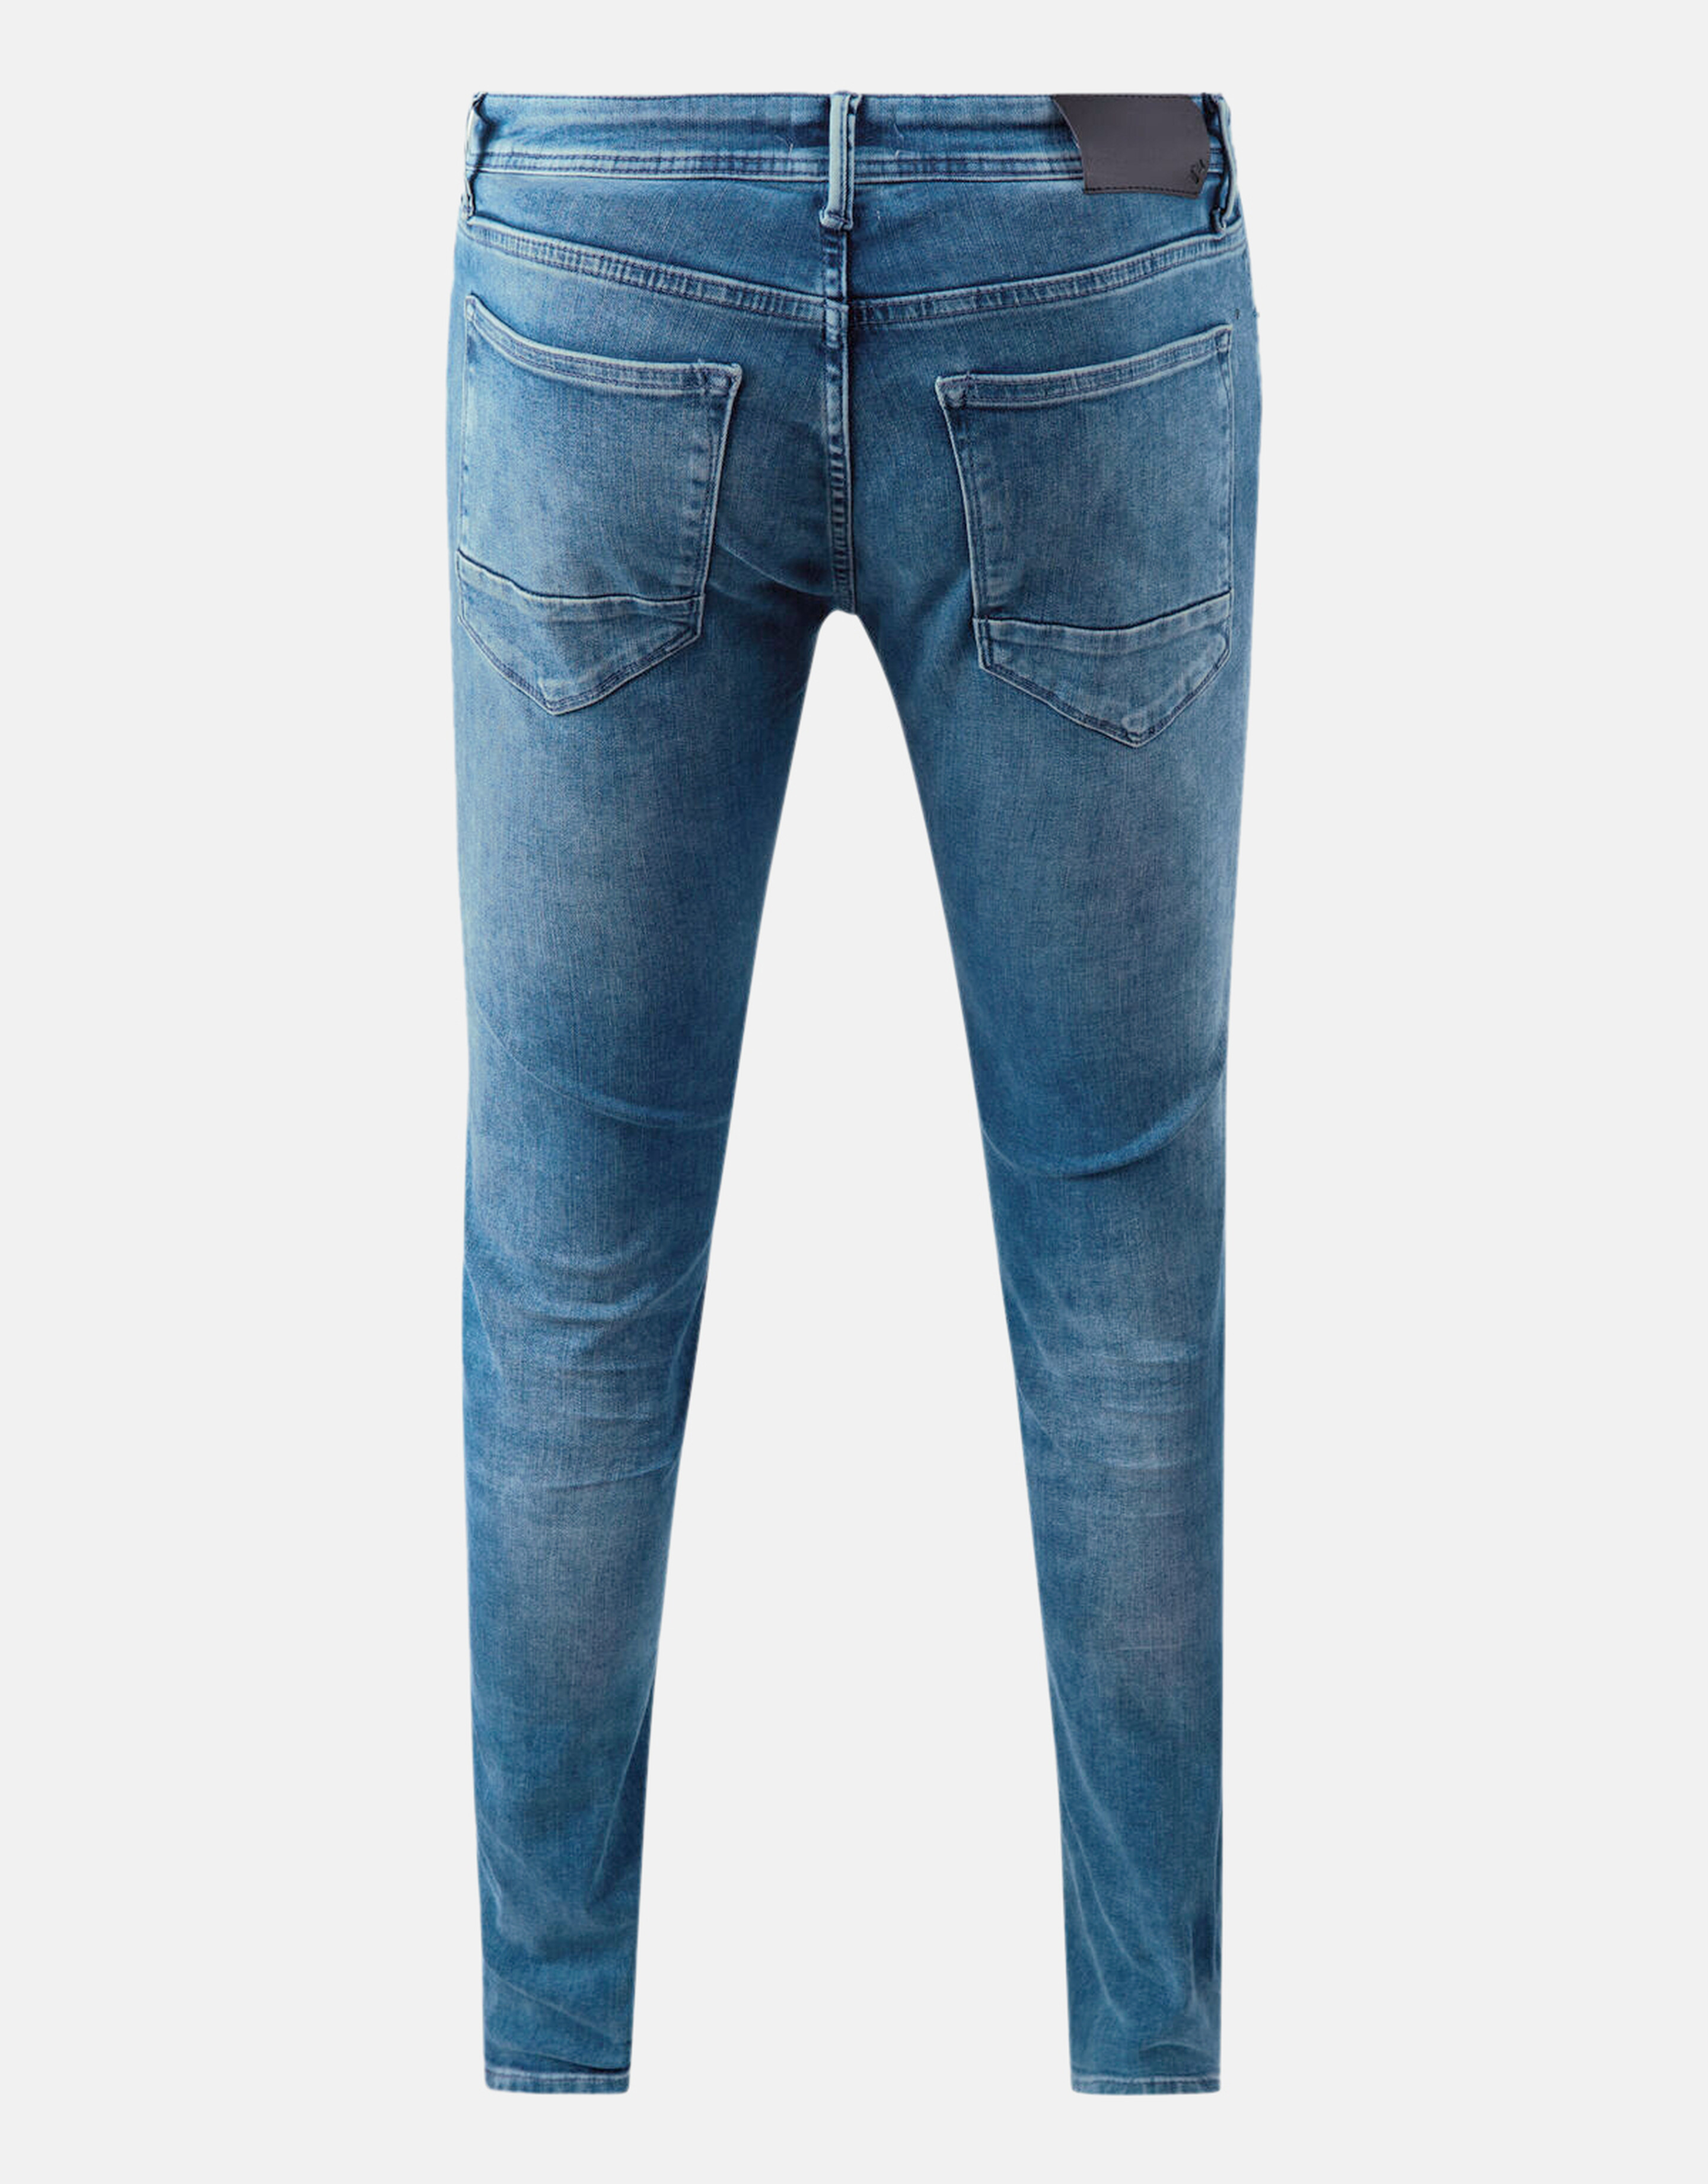 Slim Jeans Blau Länge 34 Refill